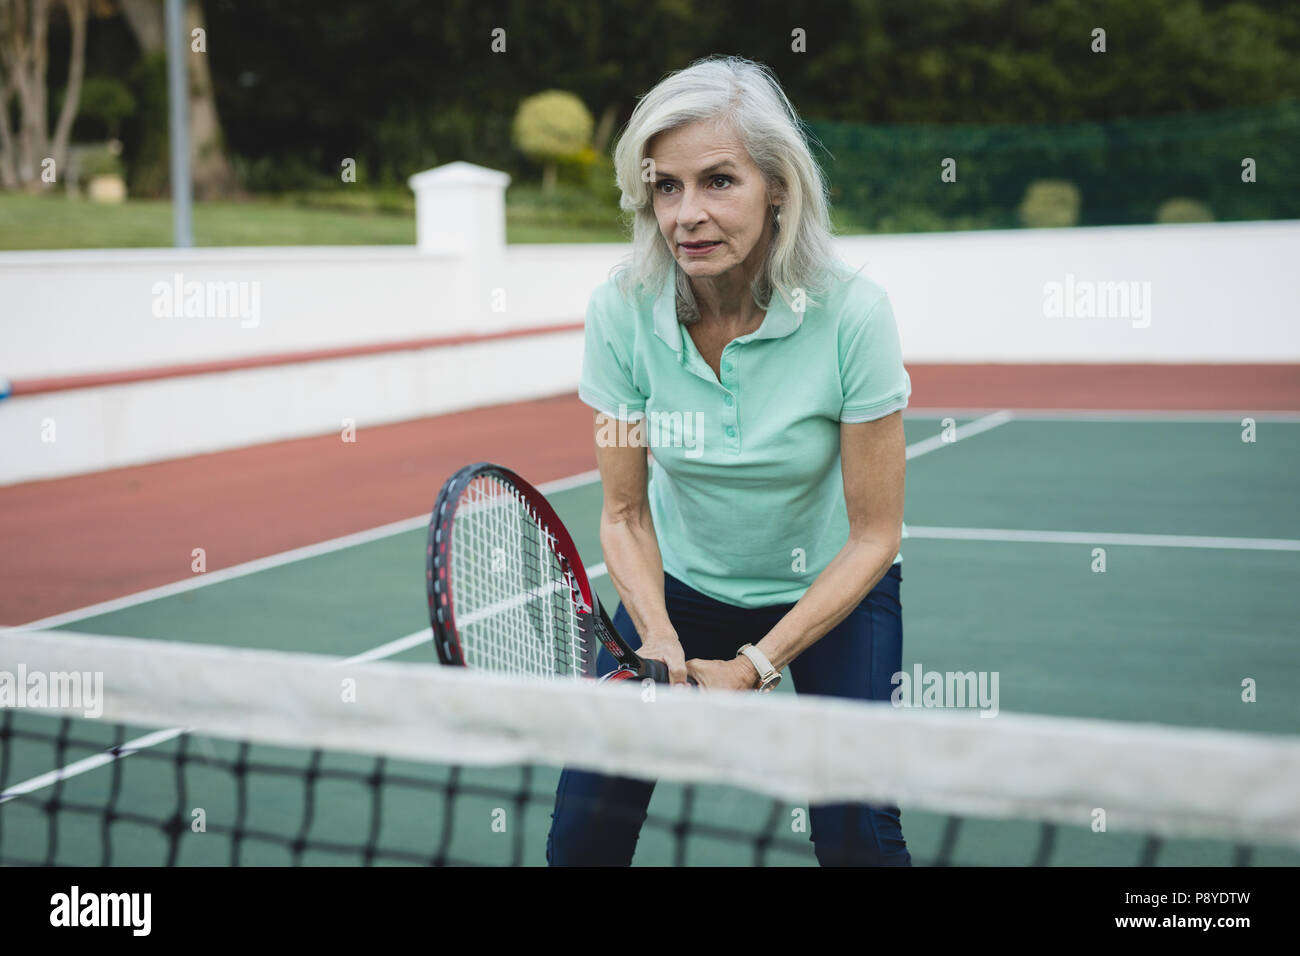 Senior woman playing tennis in tennis court Stock Photo